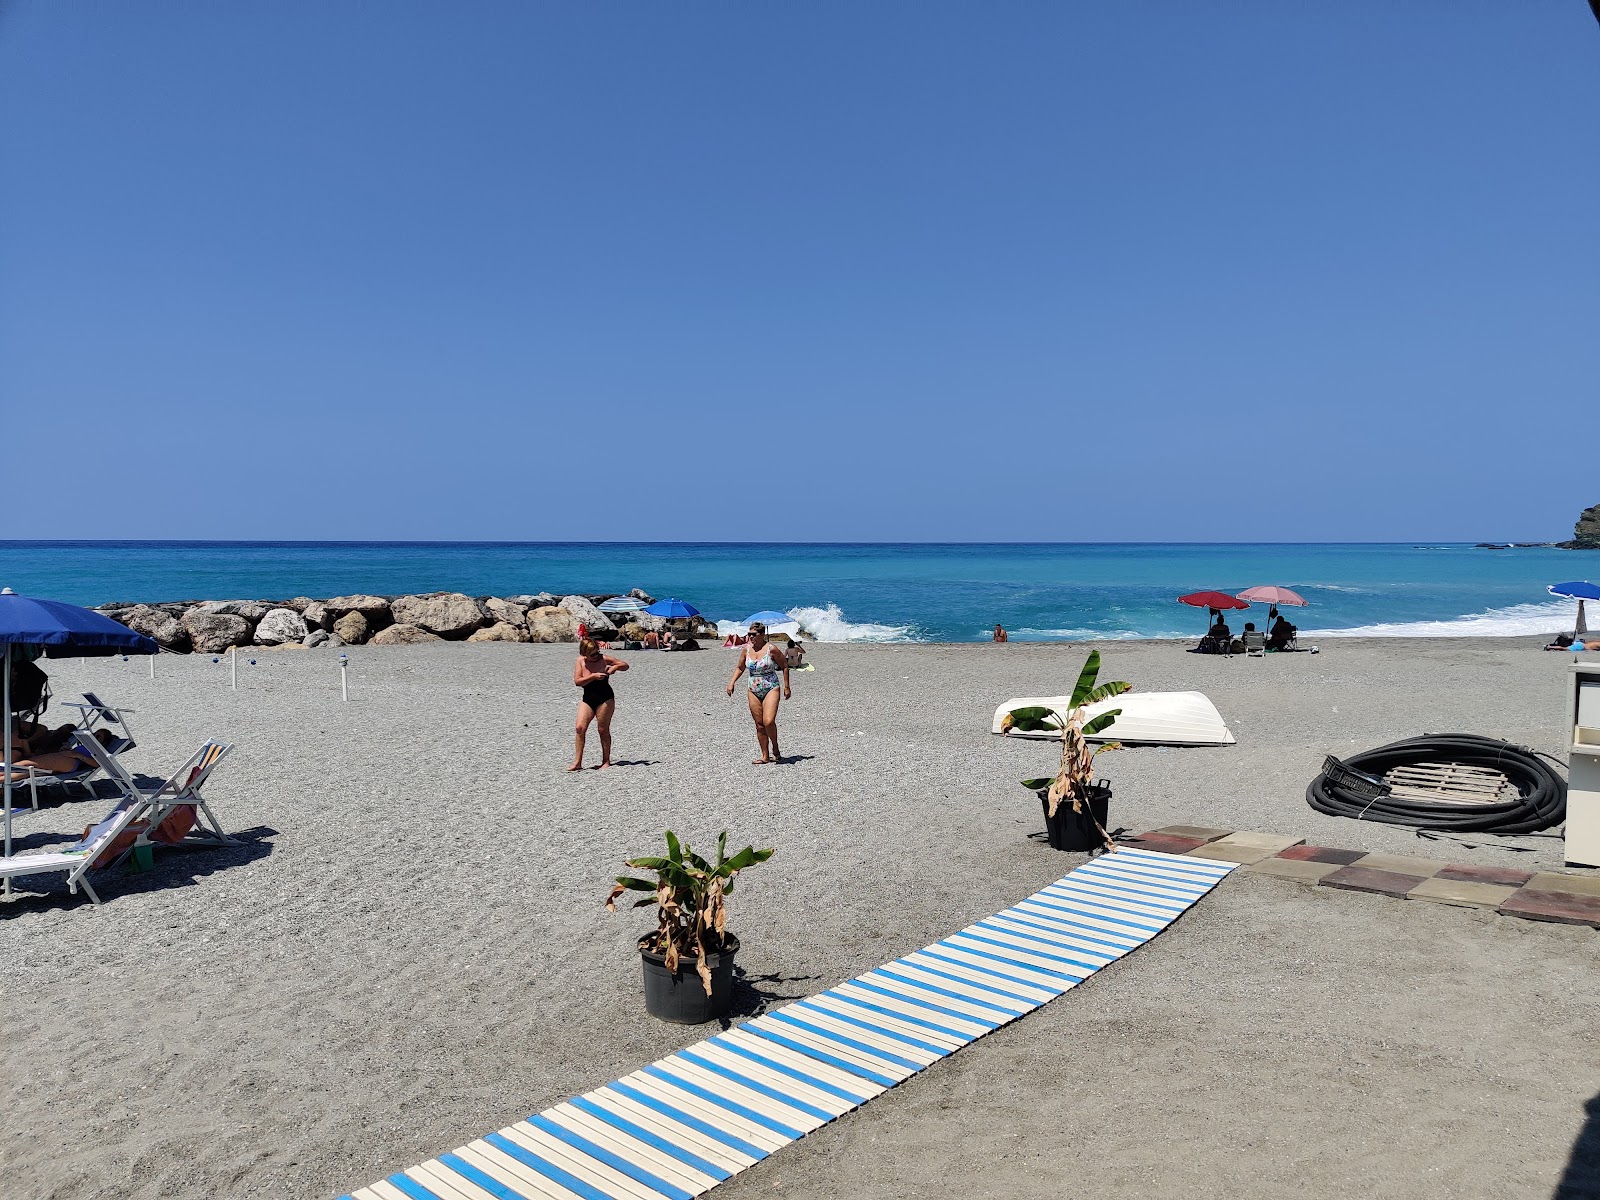 Spiaggia Coreca的照片 带有蓝色纯水表面